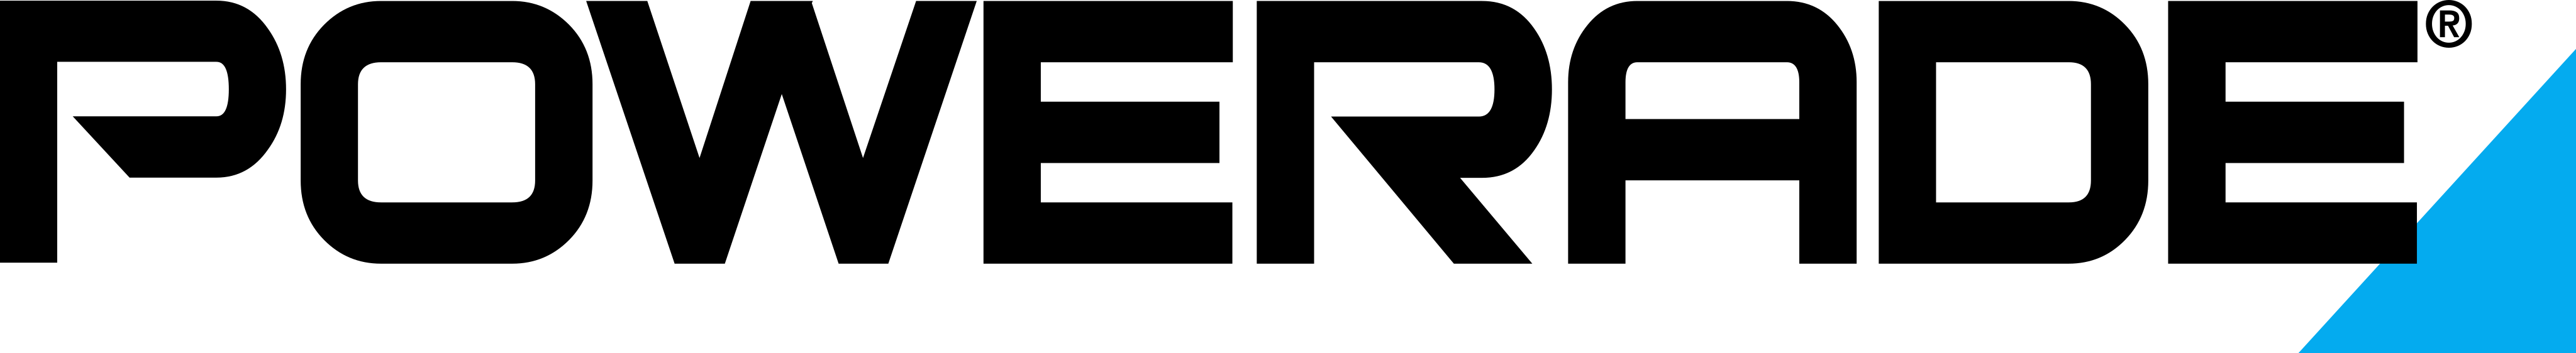 Powerade Logo.